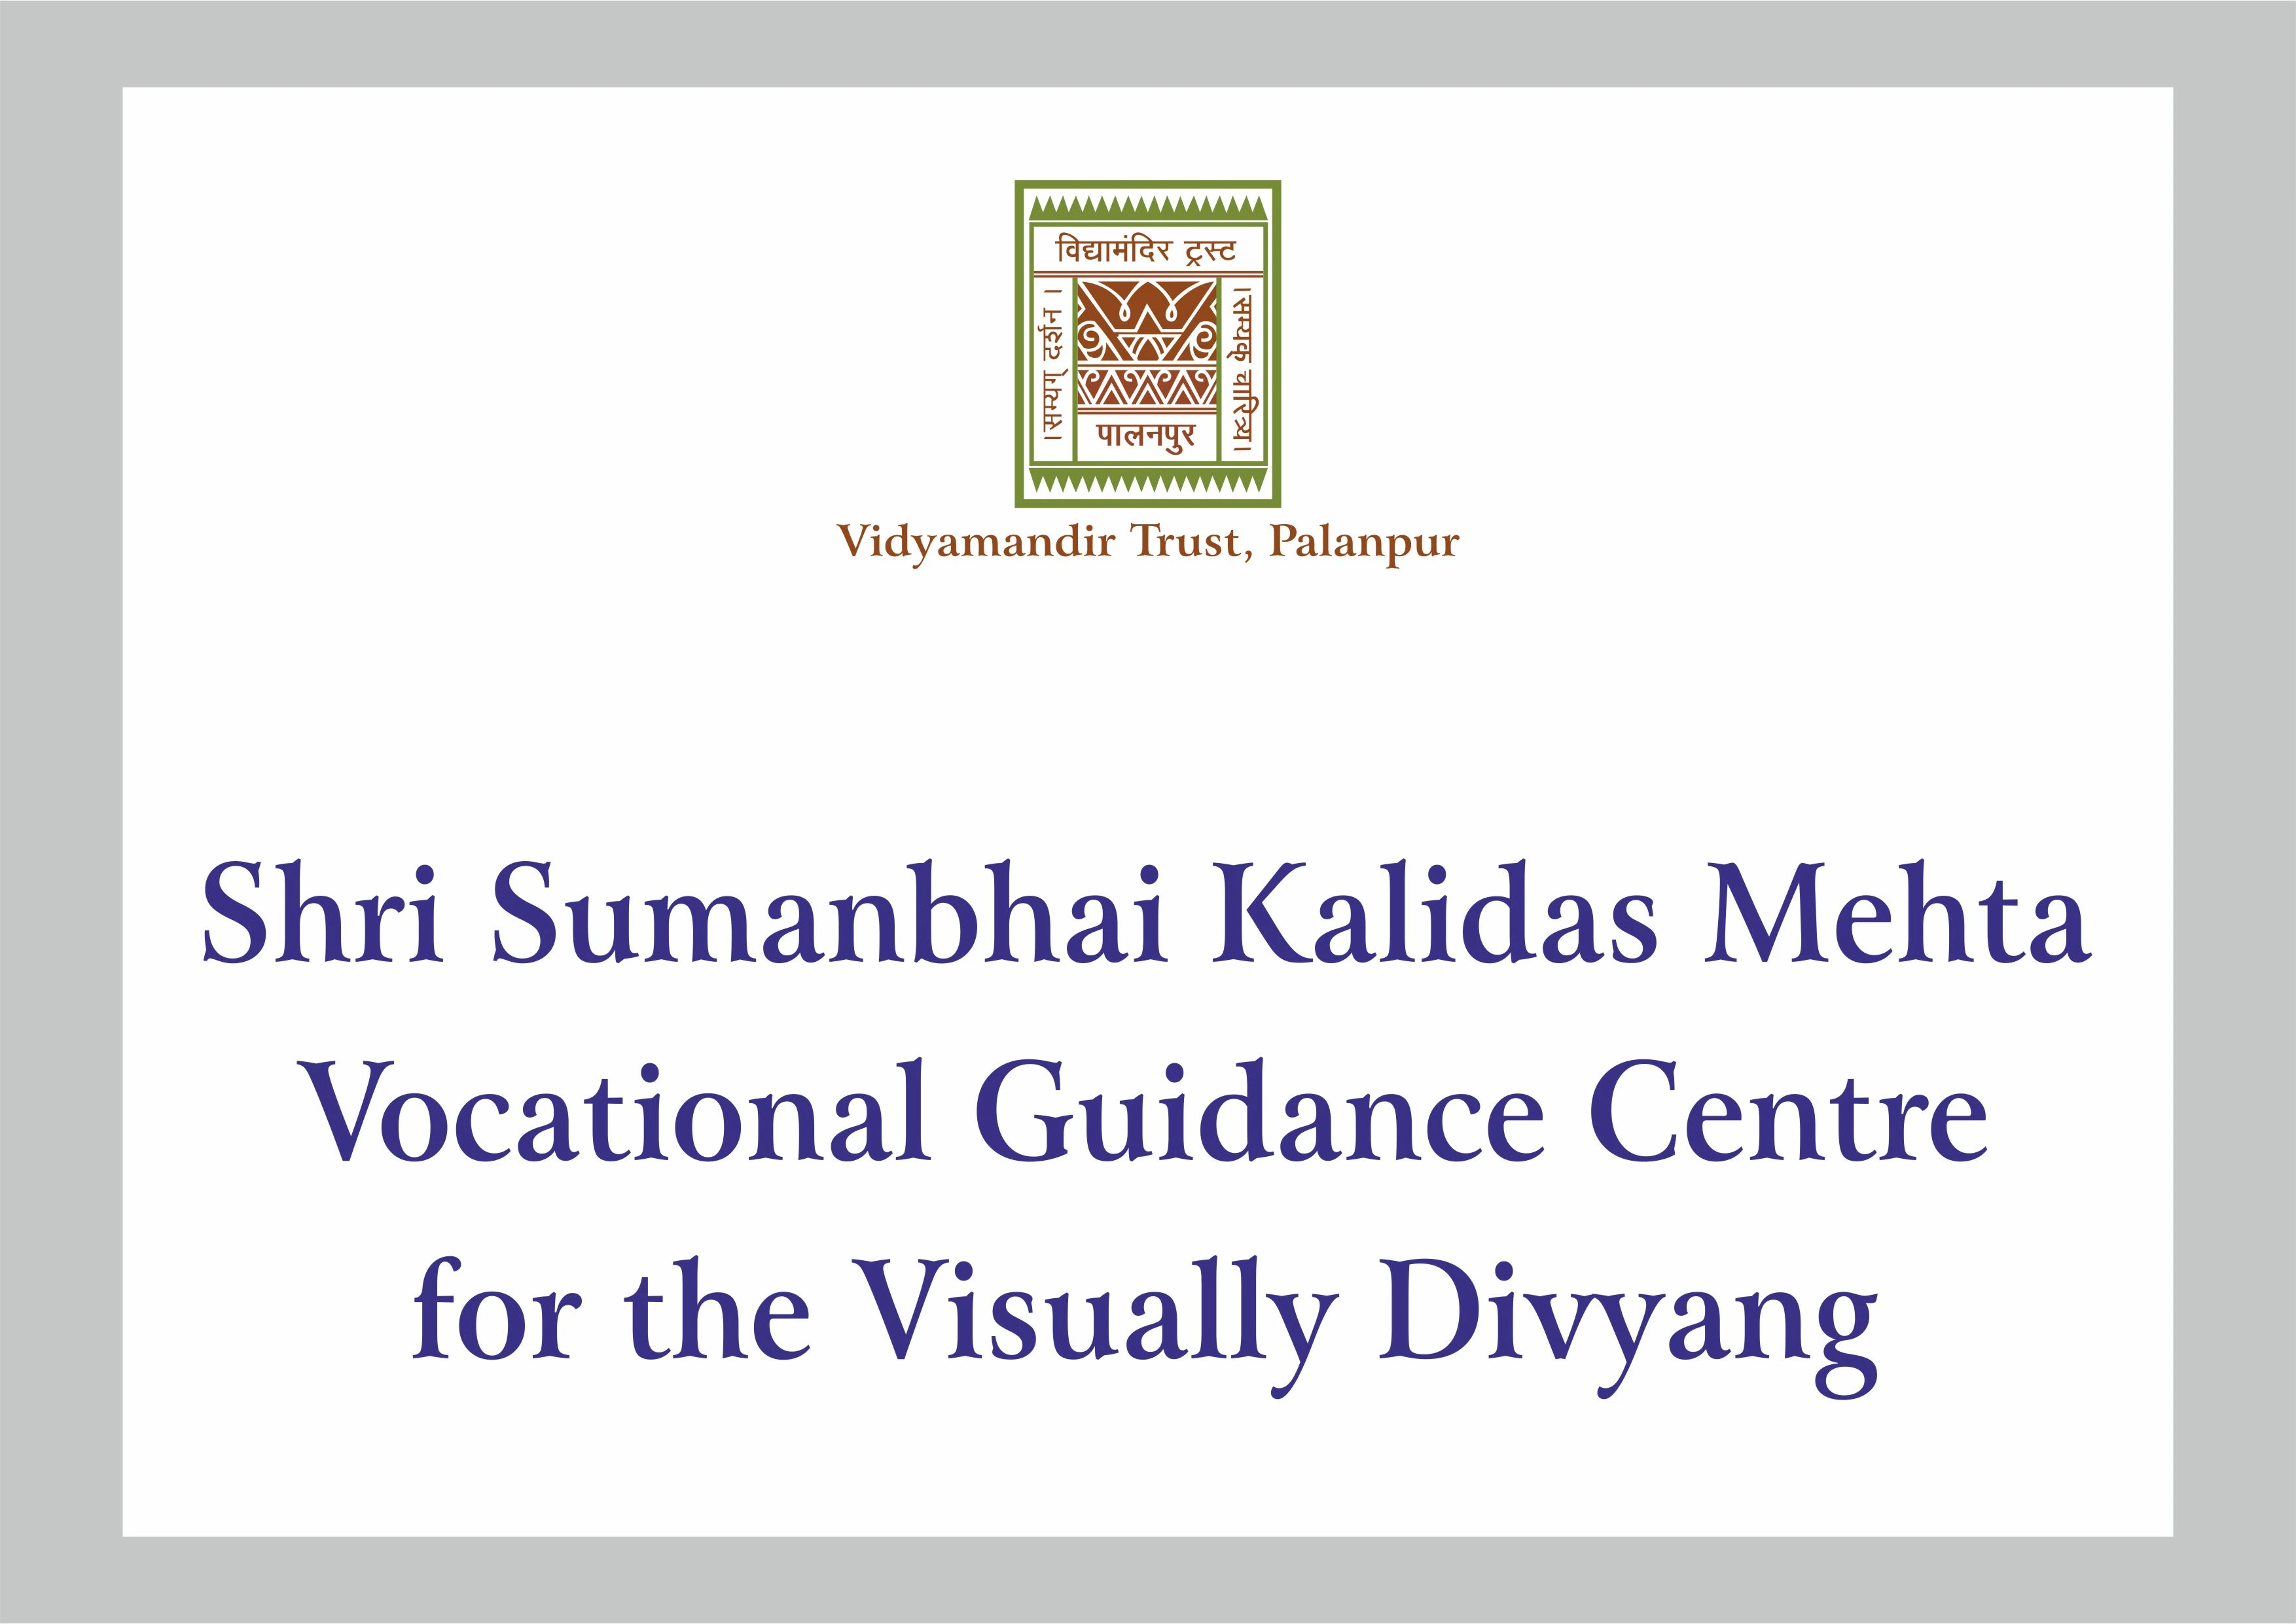 Shri Sumanbhai Kalidas Mehta Vocational Guidance Centre for the Visually Divyang - Building Photo